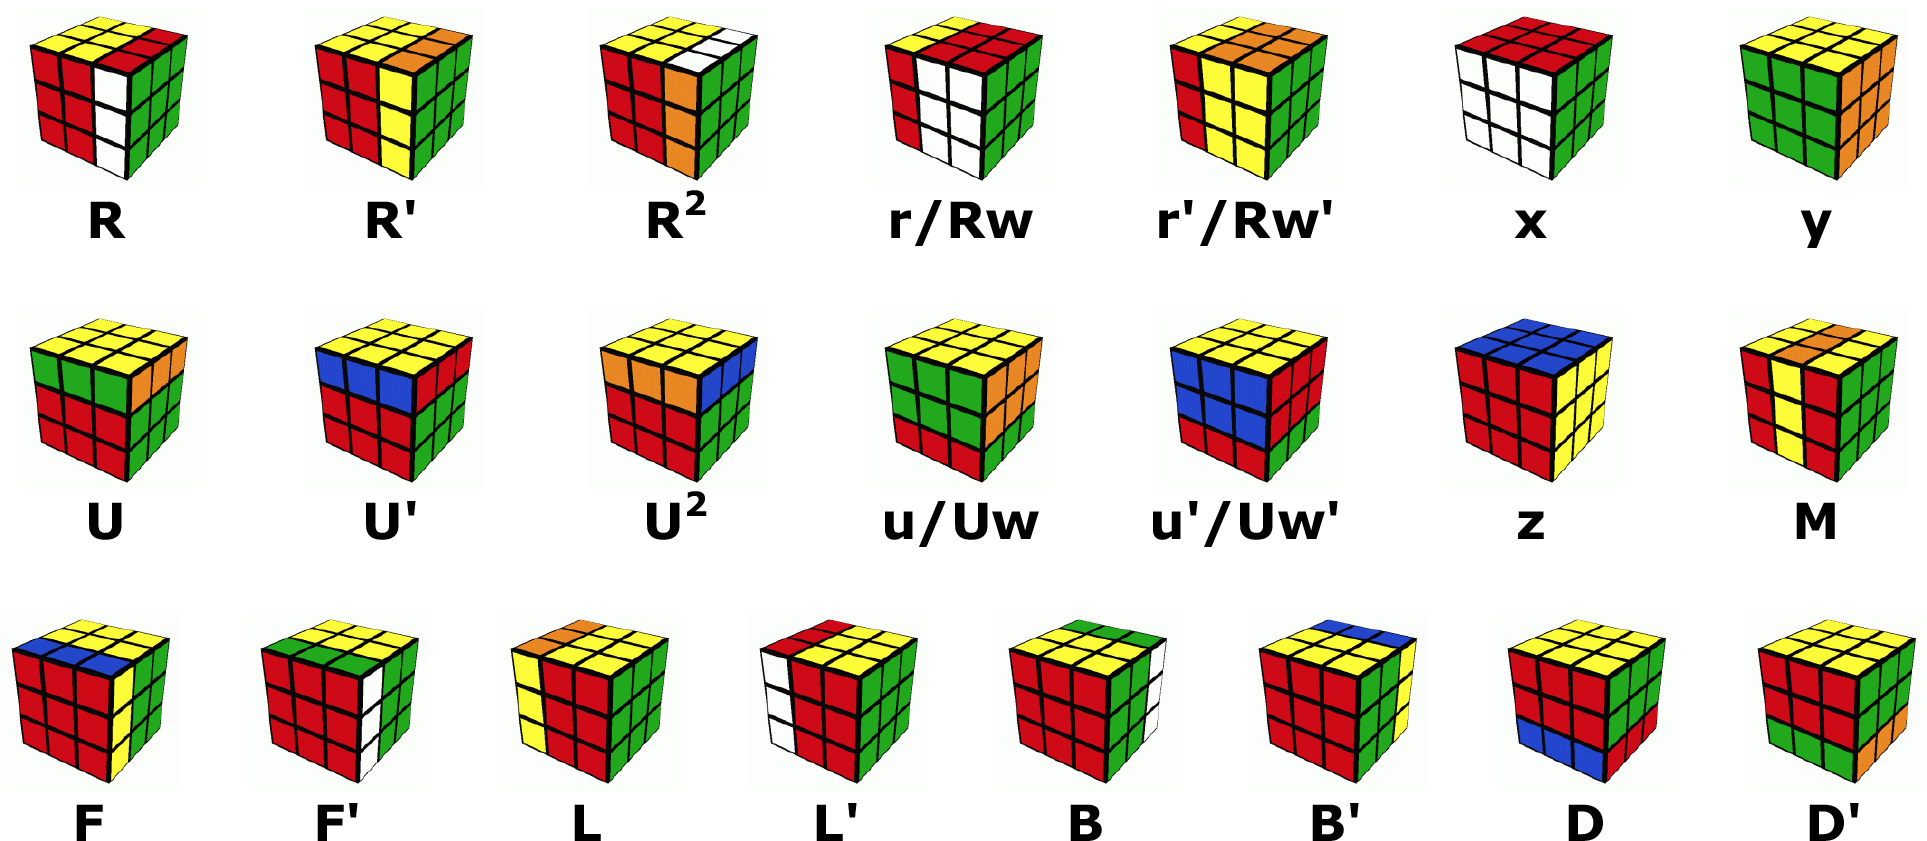 M2M Day 88: How to fairly scramble a Rubik's Cube | by Max Deutsch | Medium